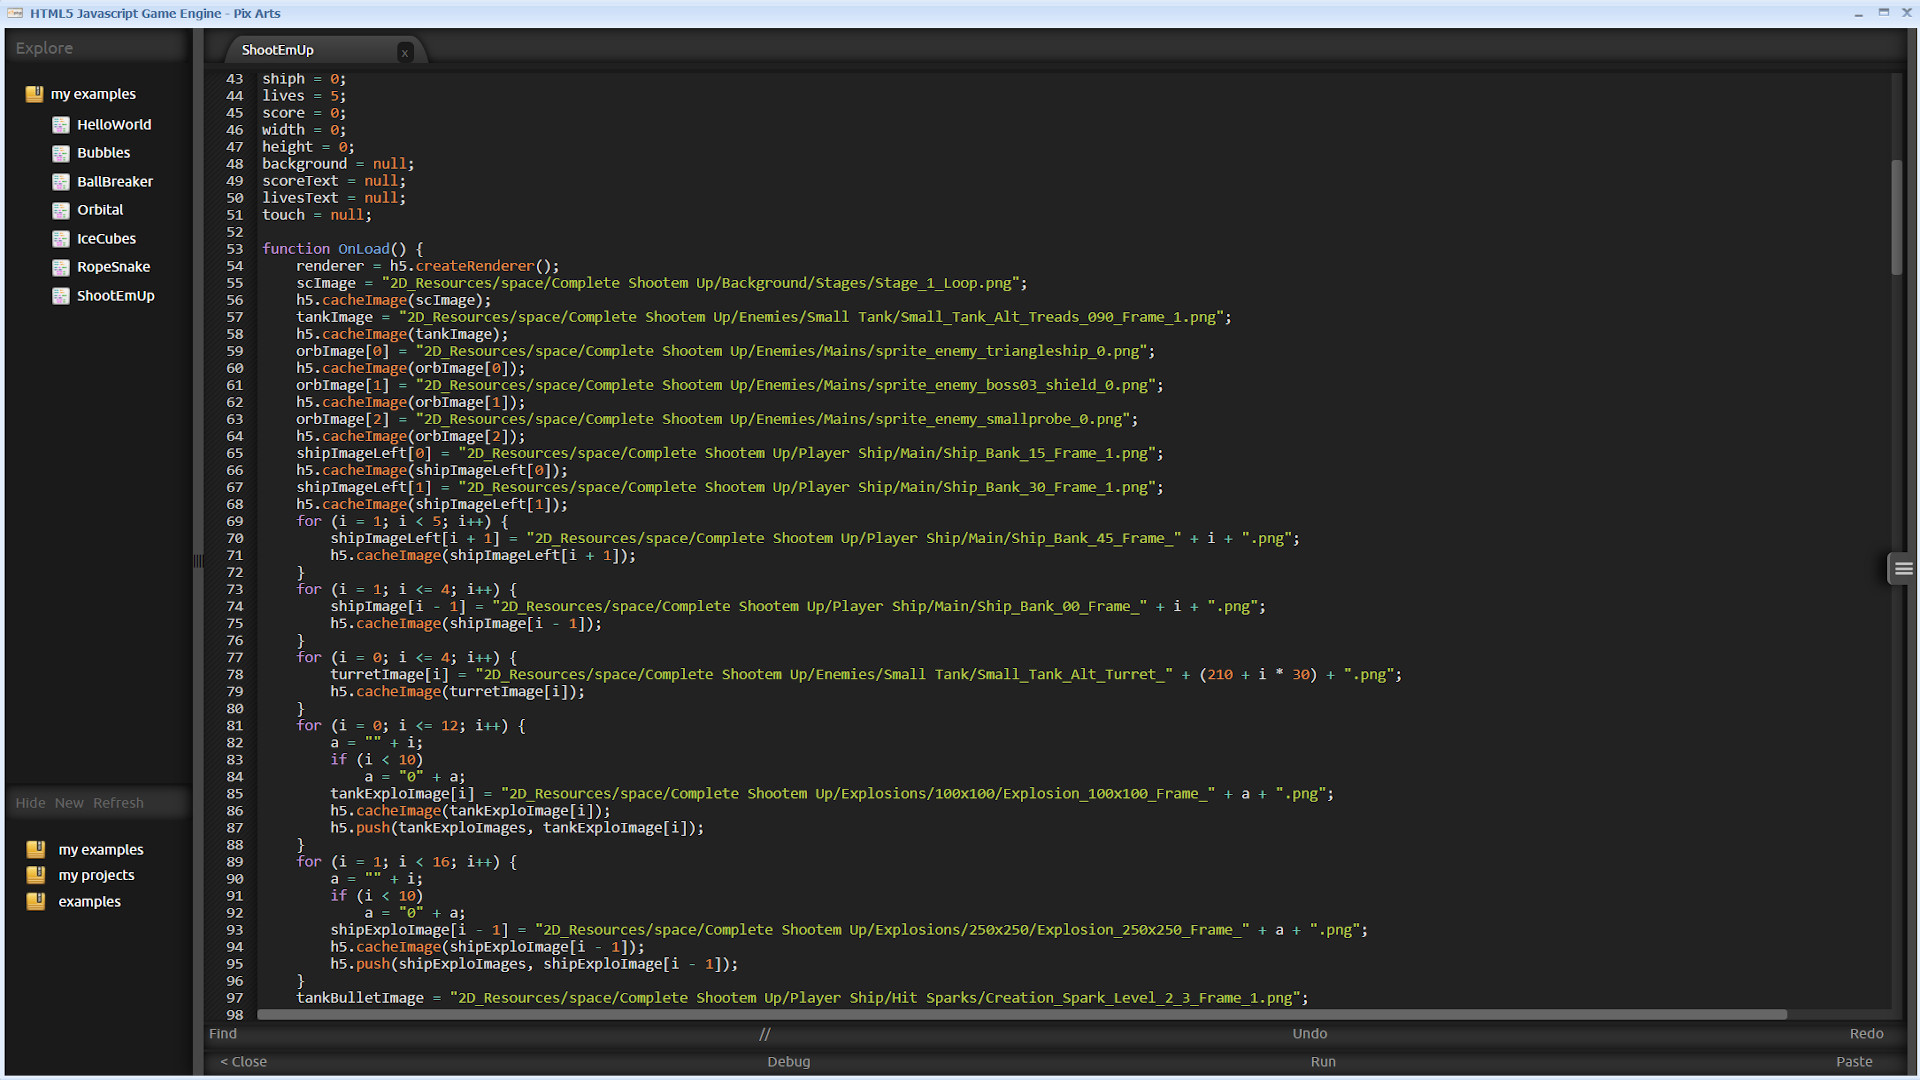 HTML5 Javascript Game Engine screenshot